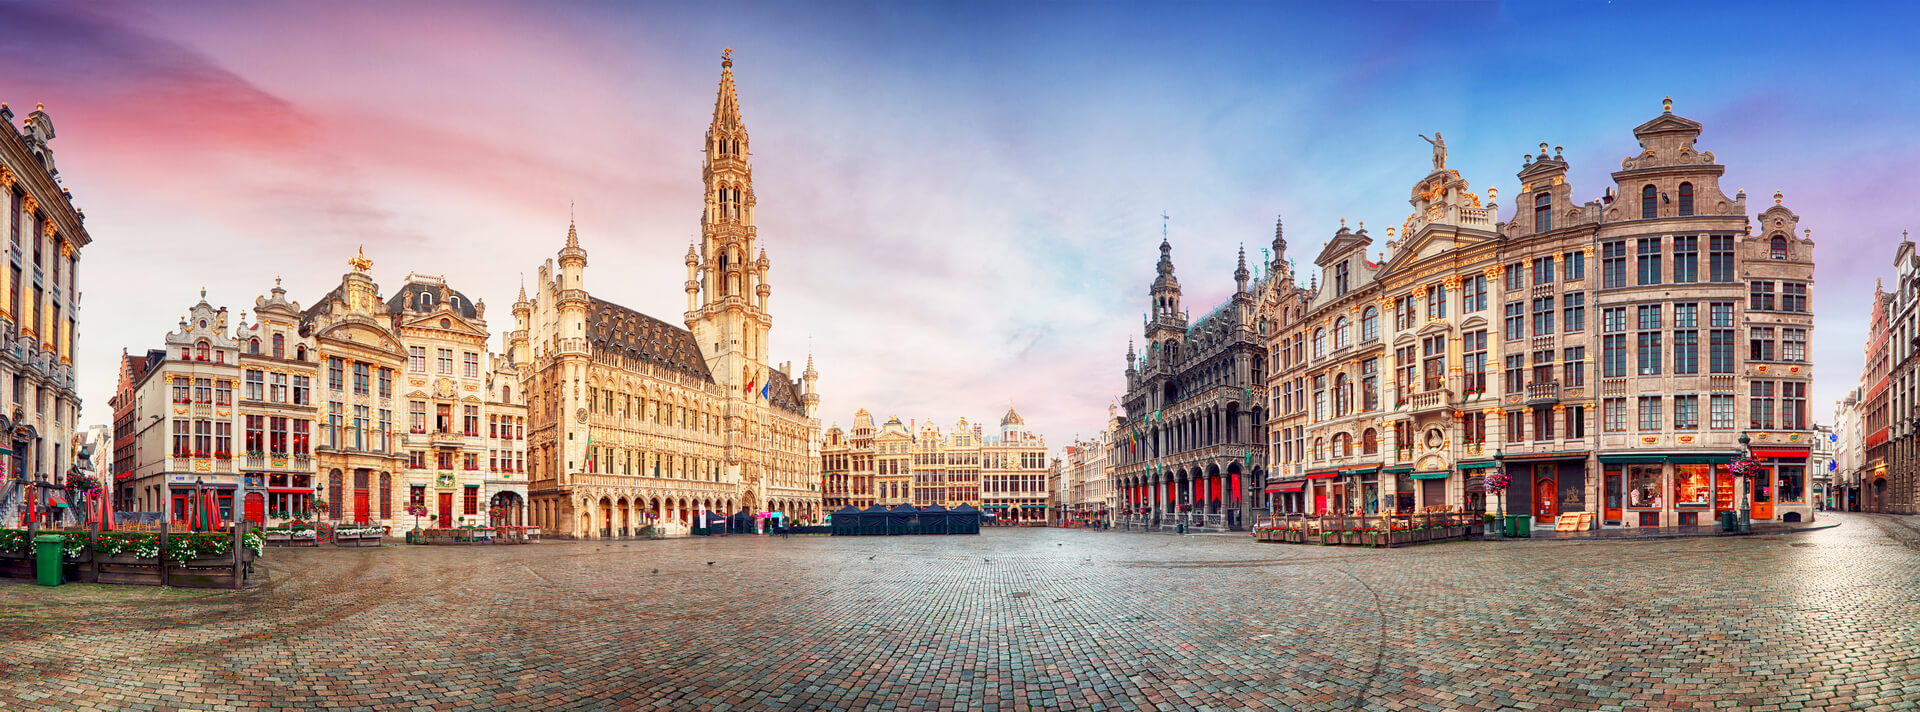 Brussels, Grand Place in beautiful summer sunrise, Belgium